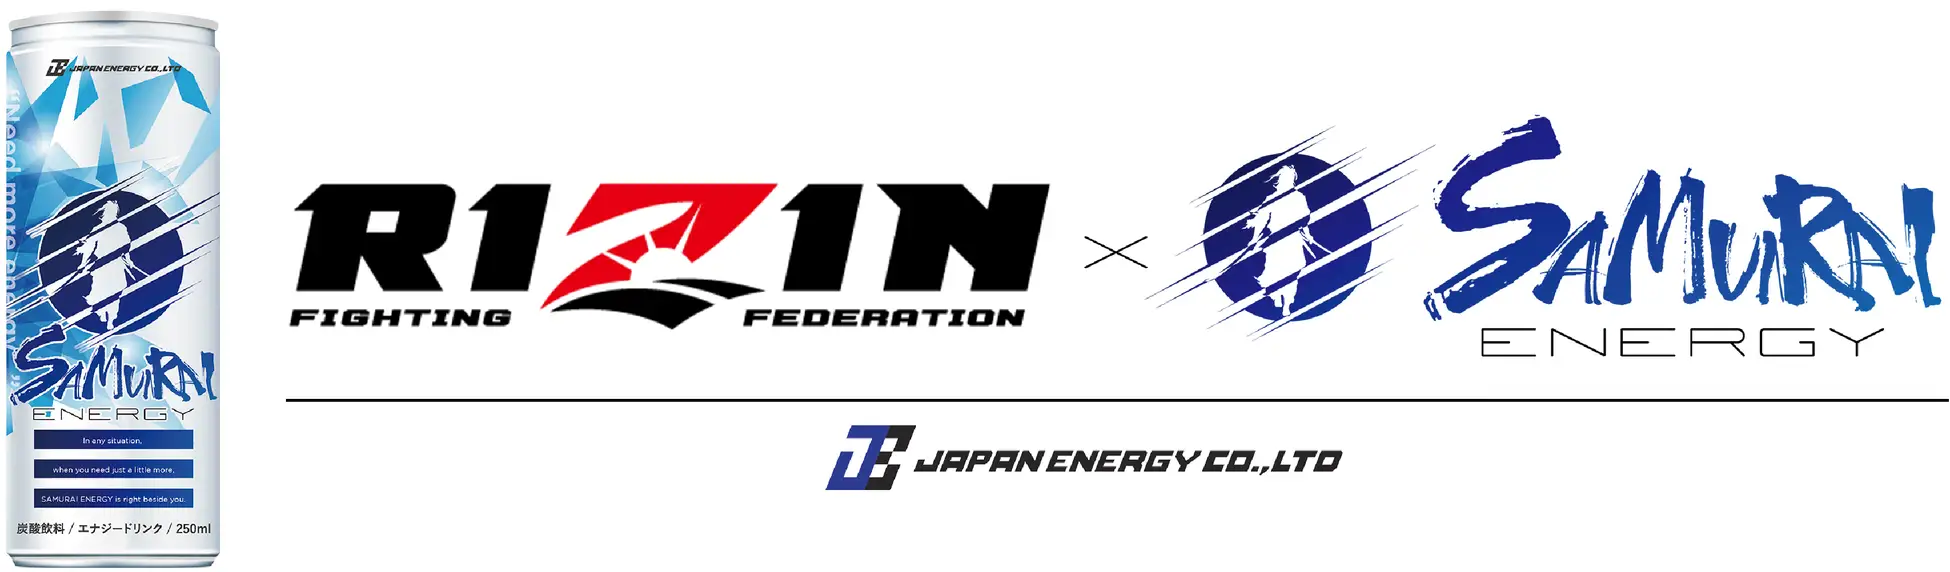 【SAMURAI ENERGY】総合格闘技団体「RIZIN FIGHTING FEDERATION」(運営:株式 会社ドリームファクトリーワールドワイド様)との年間スポンサー契約のお知らせ